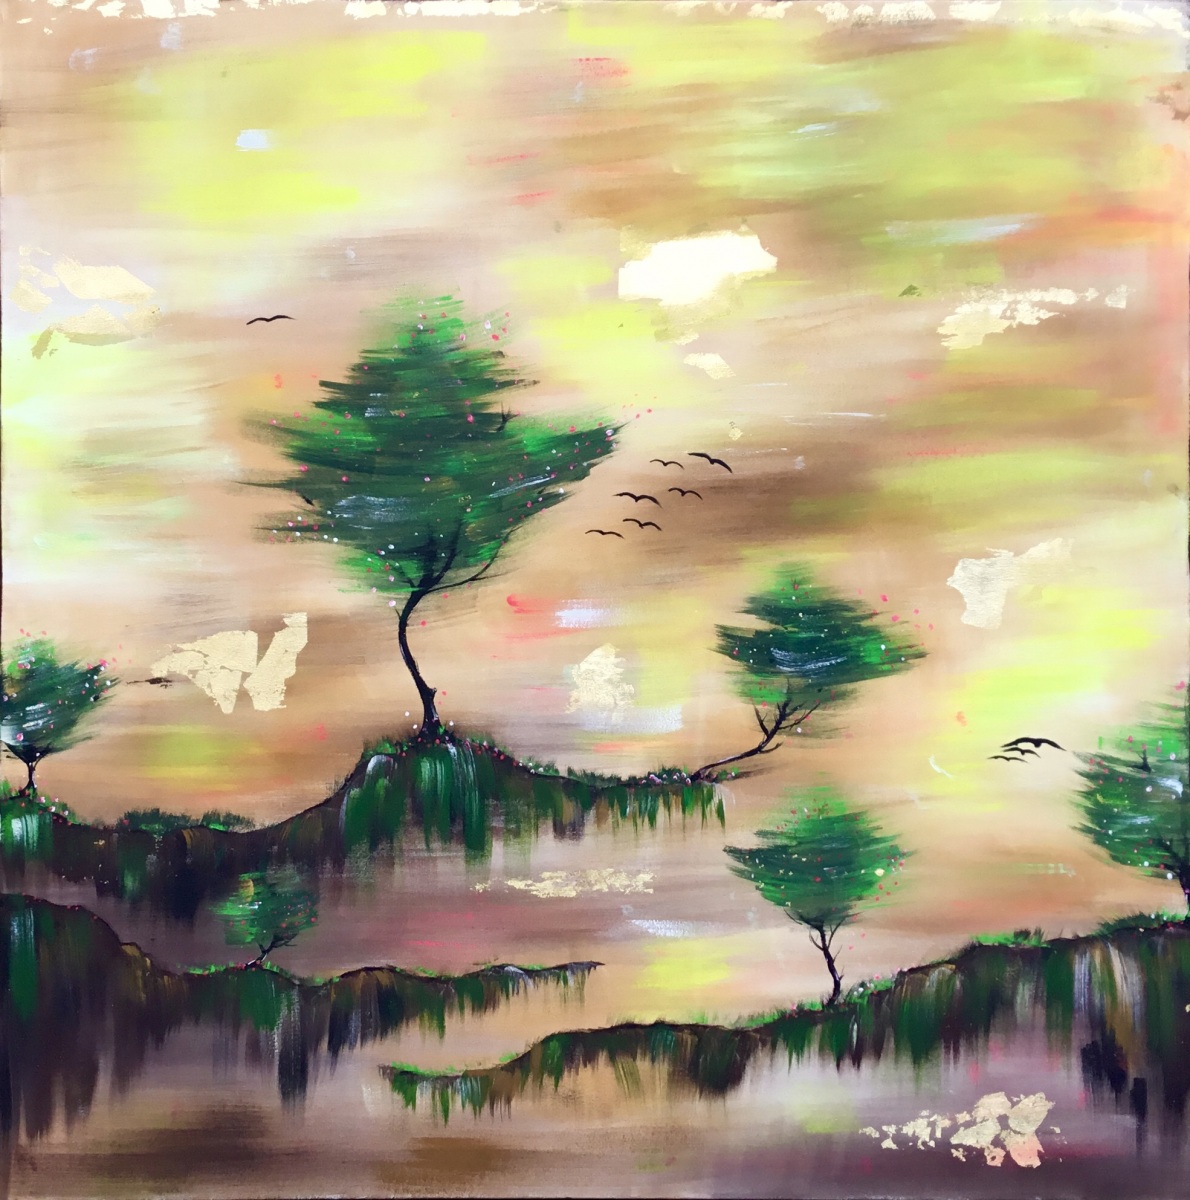 " DREAMLAD" - a landscape painting , large size, acrylics on canvas.